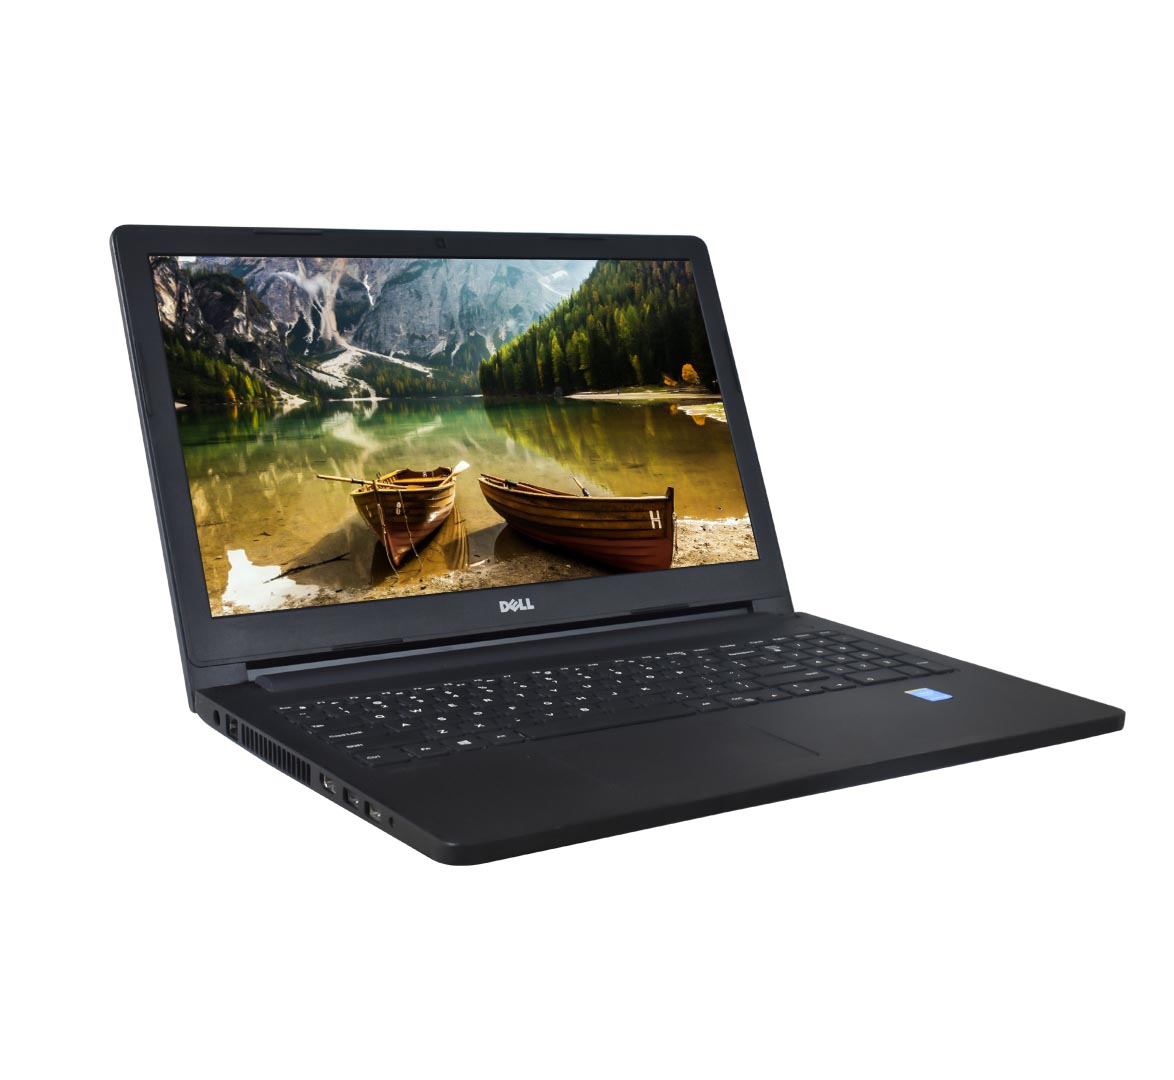 Dell Latitude 3560 Business Laptop, Intel Core i3-5th Generation CPU, 4GB RAM, 500GB HDD, 15.6 inch Display, Windows 10 Pro, Refurbished Laptop